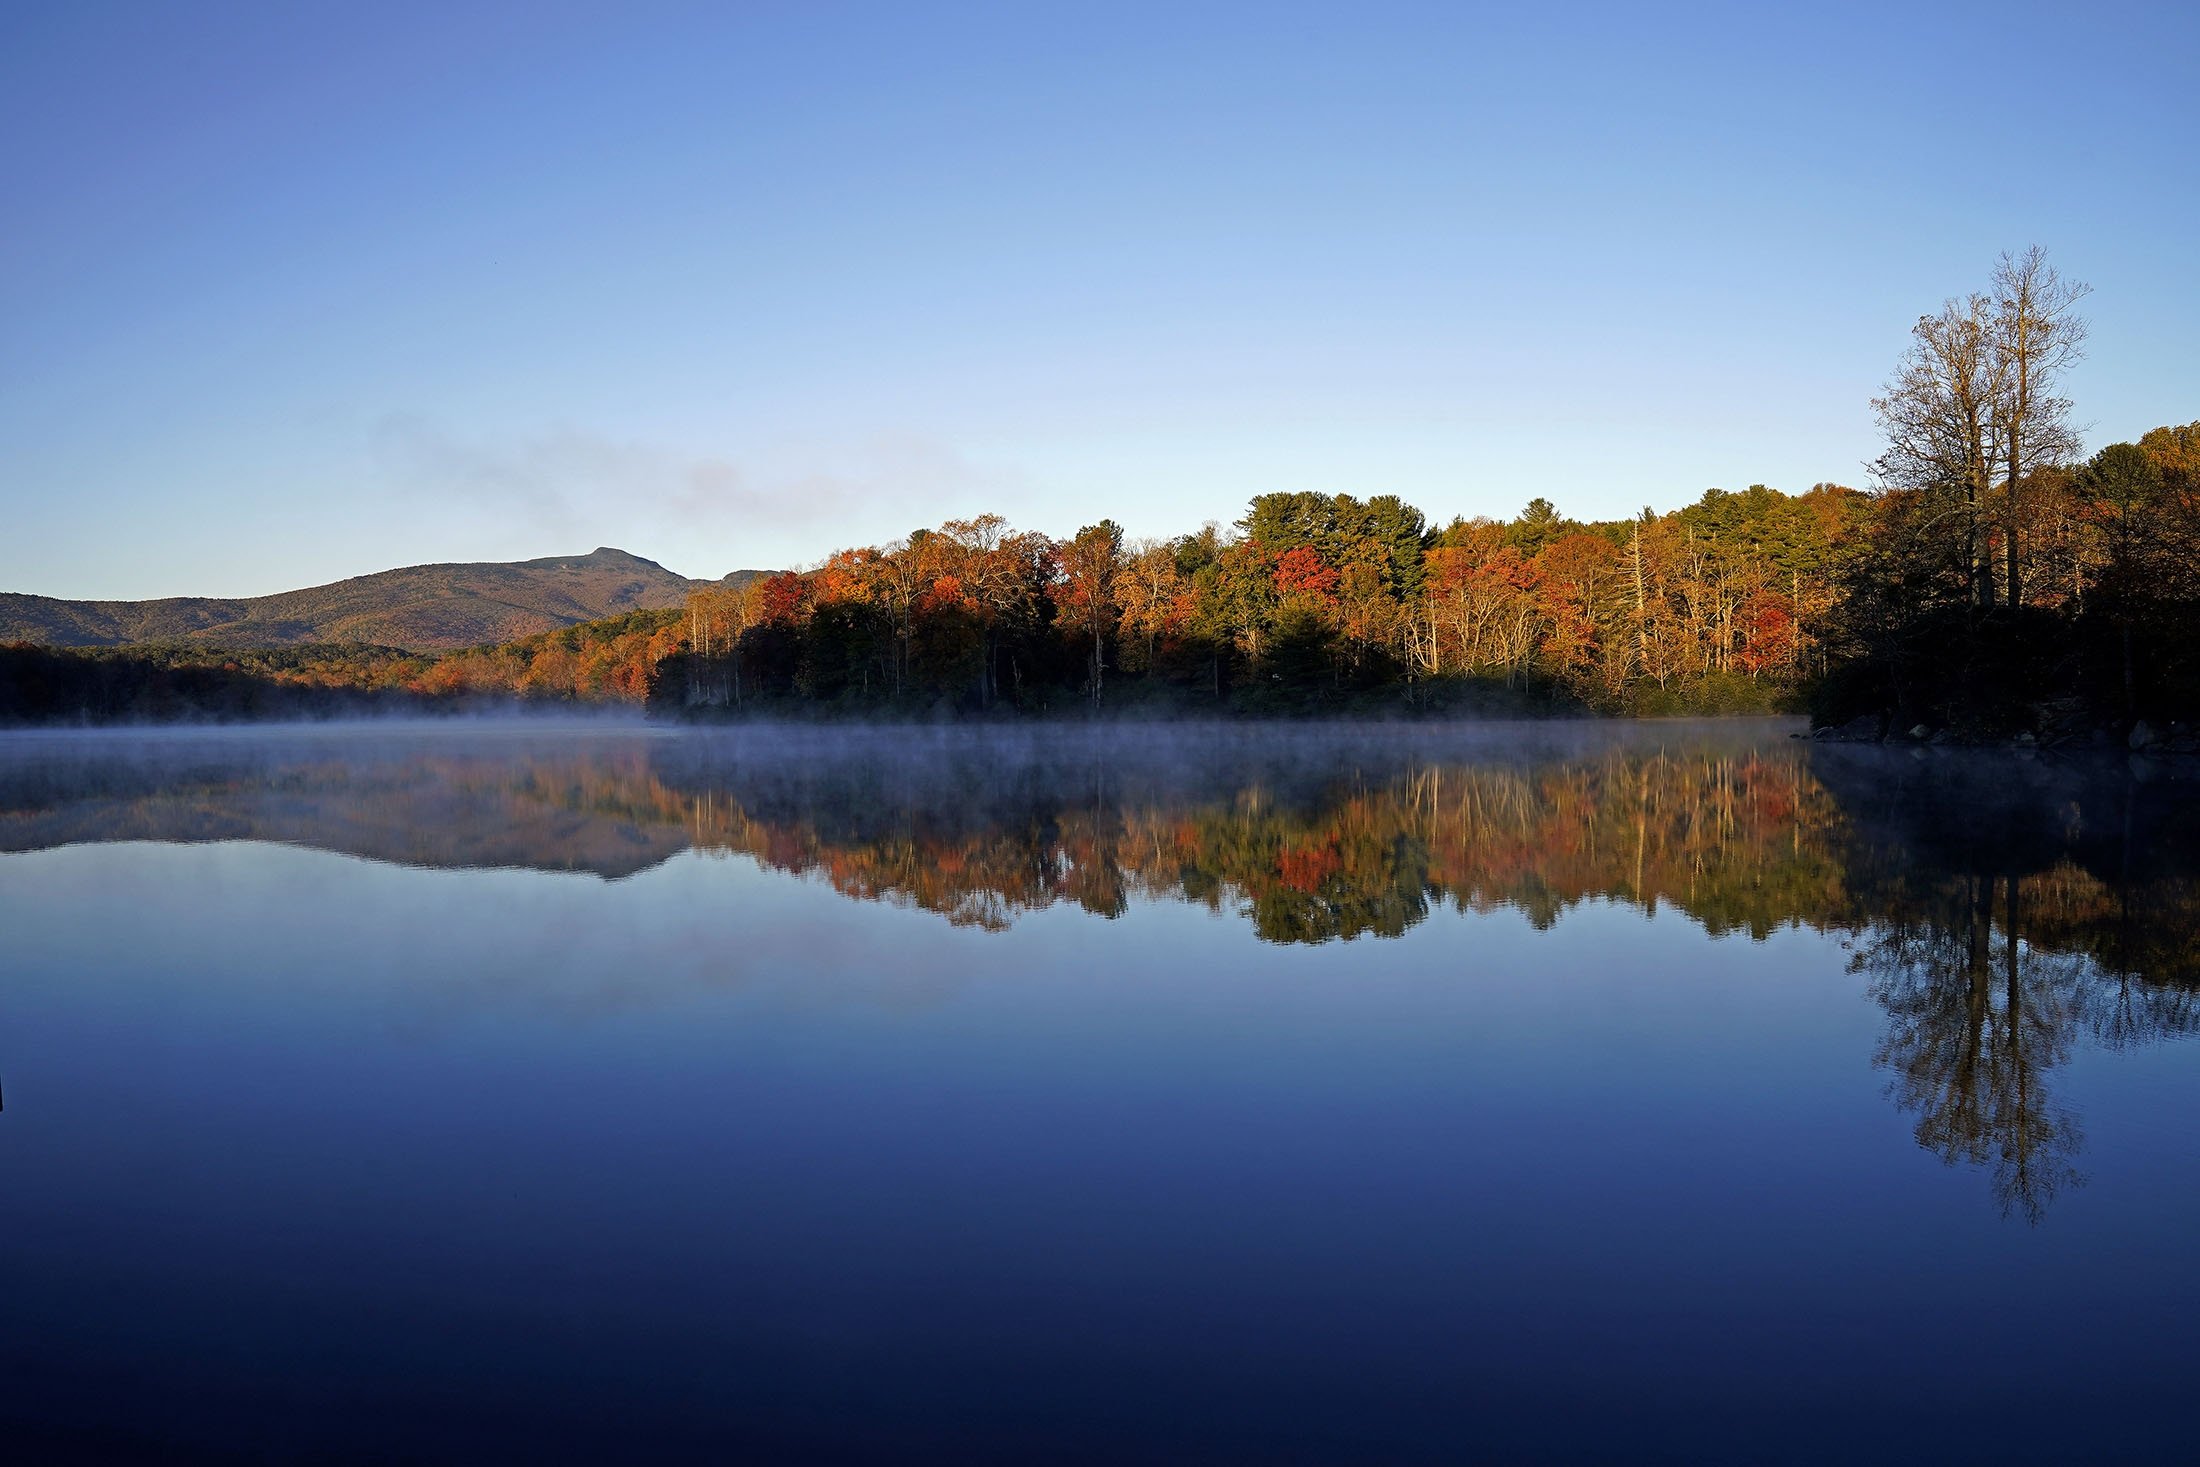 Appalachian Mountains: Blue Ridge Parkway offers fall splendor | Daily ...